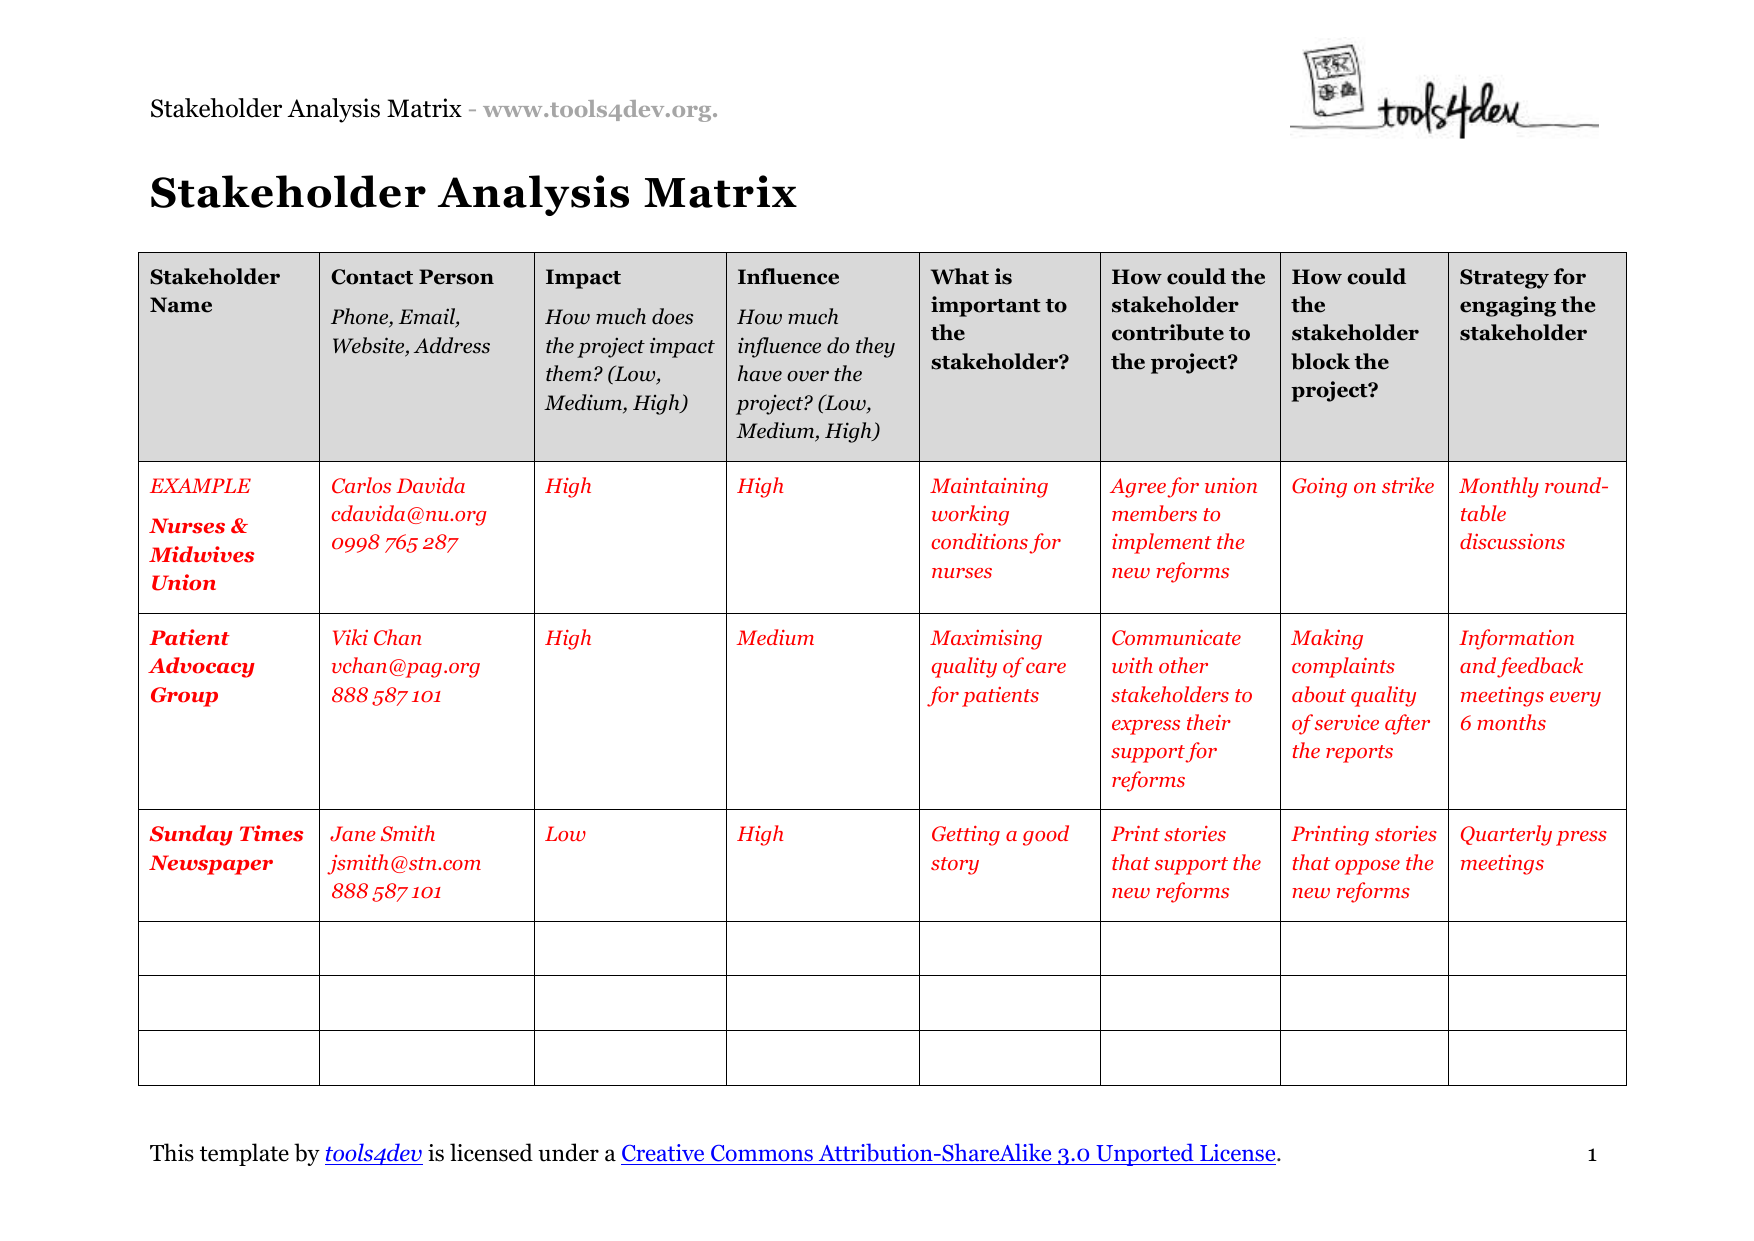 Stakeholder Assessment Matrix Example IMAGESEE